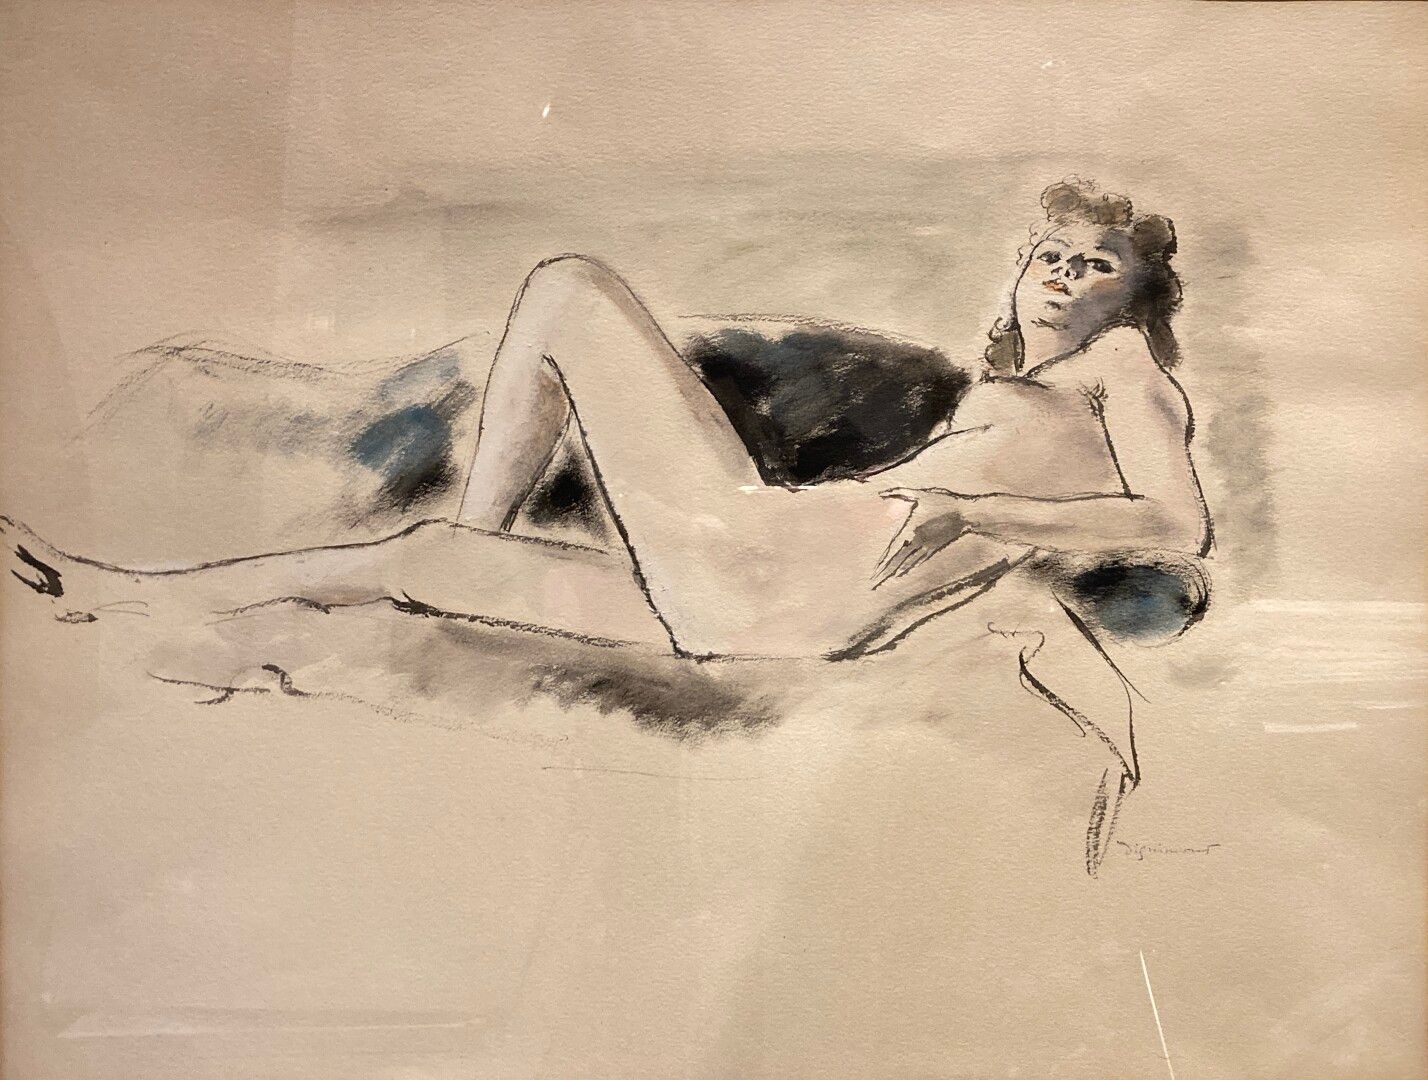 Null 安德烈-迪尼蒙(André DIGNIMONT) (1891-1965)

慵懒状态下的女人

纸上水彩画，右下角有签名

49 x 64 厘米